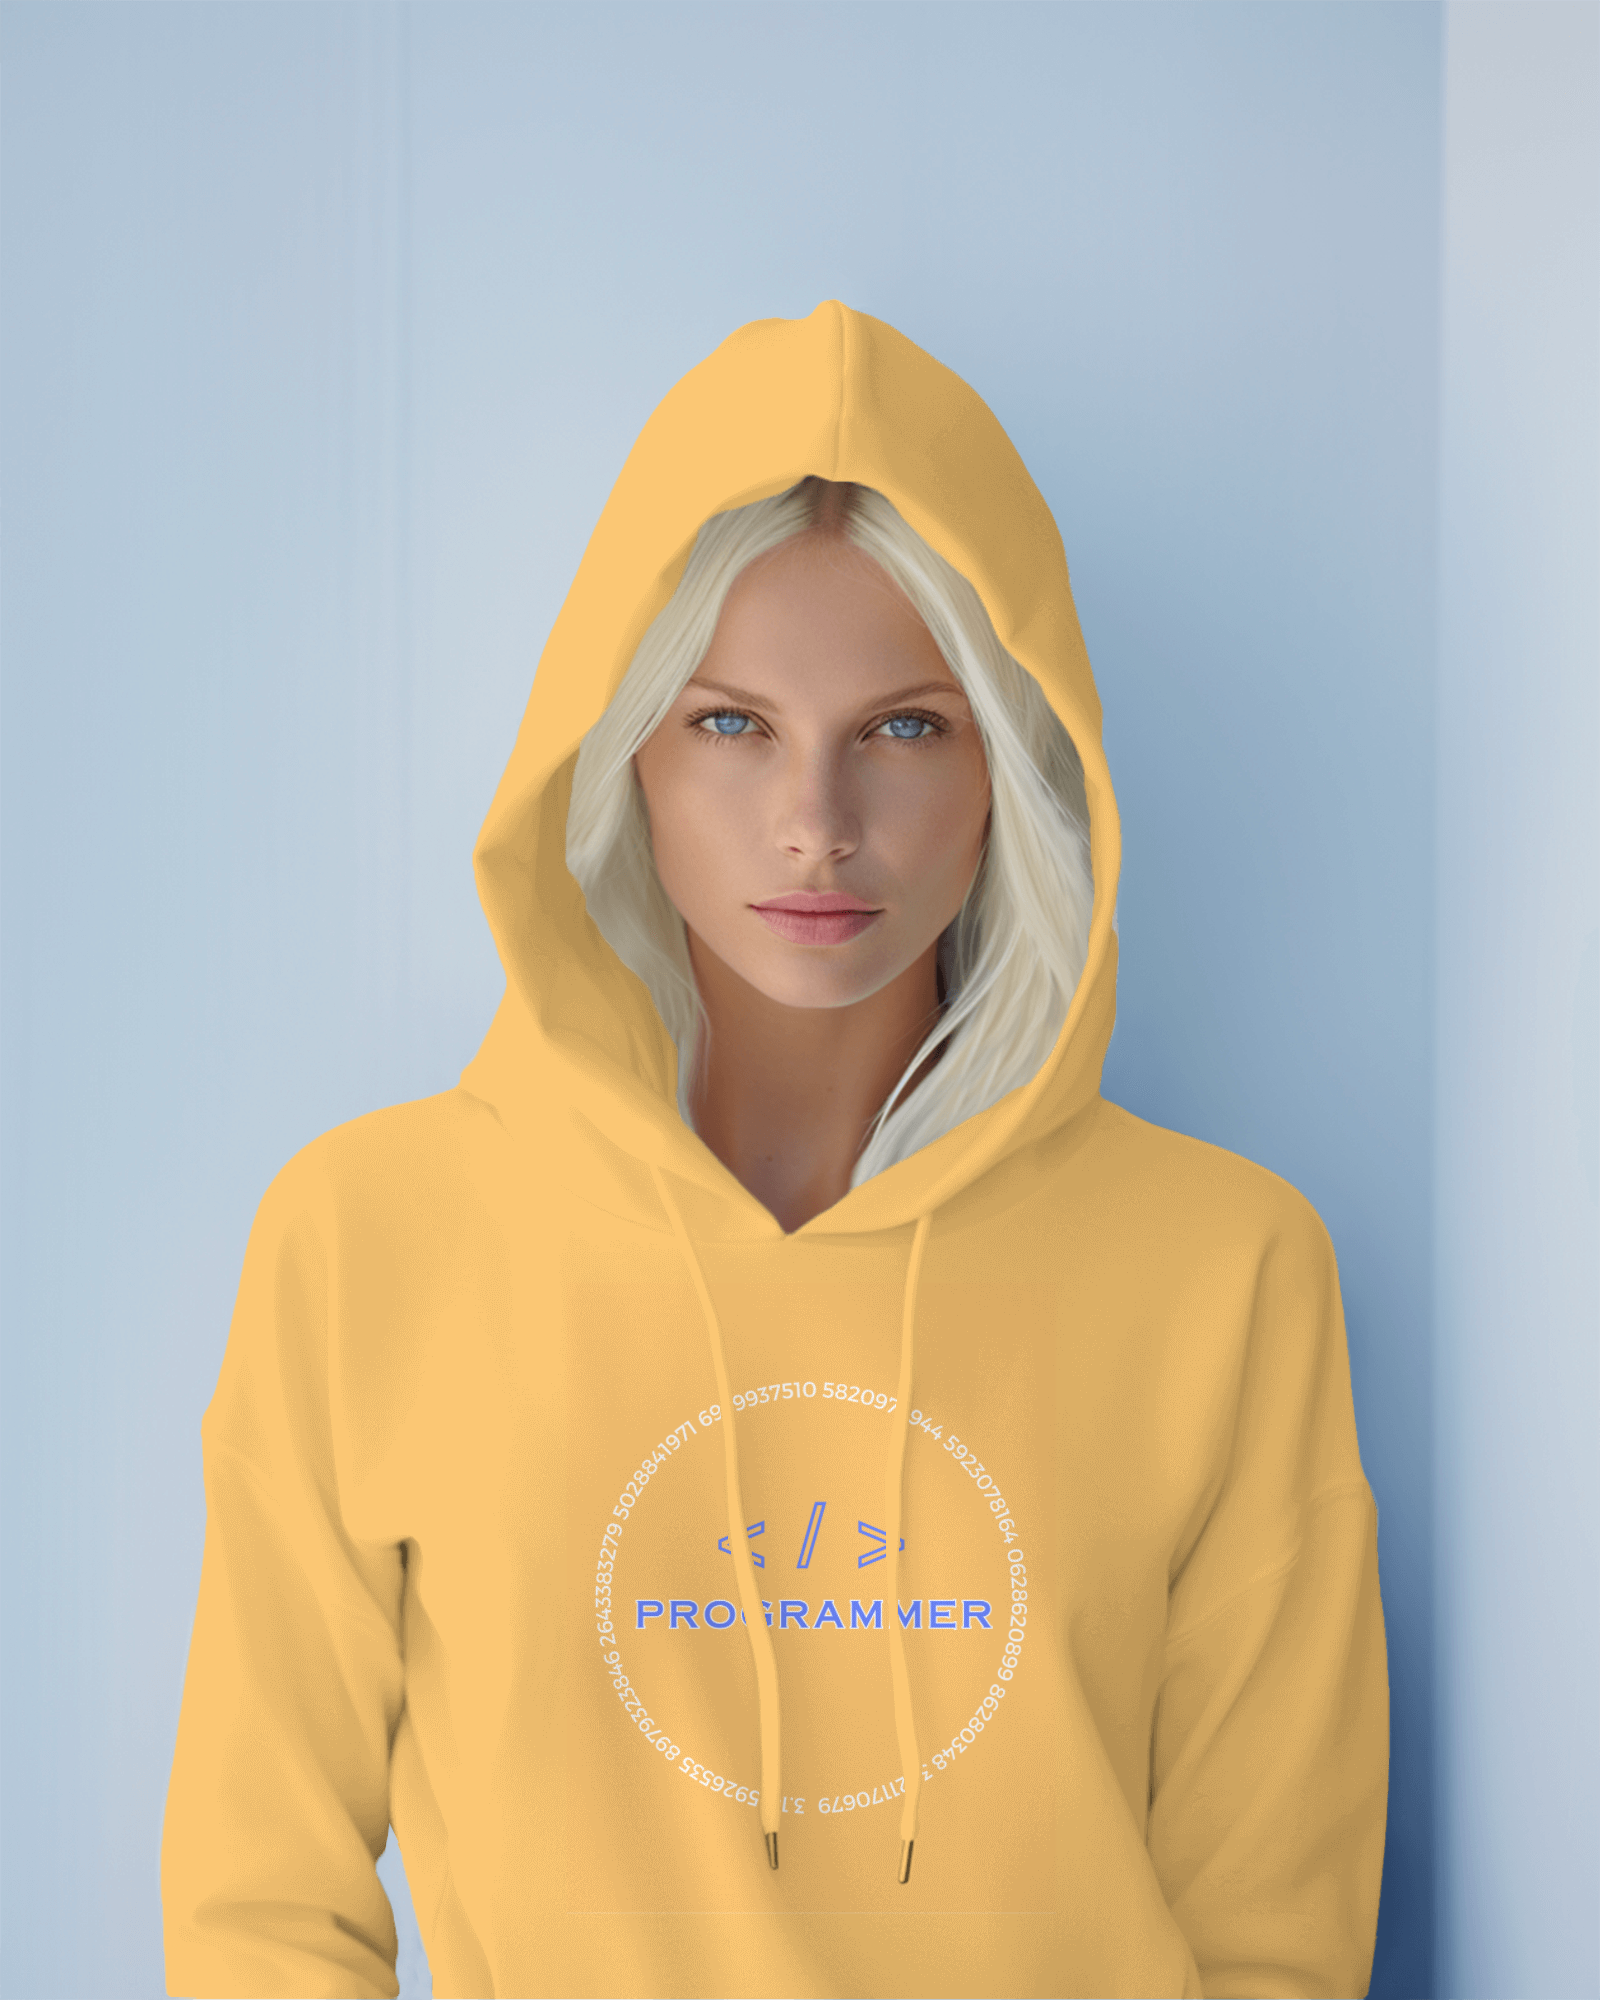 hoodies for hackers community